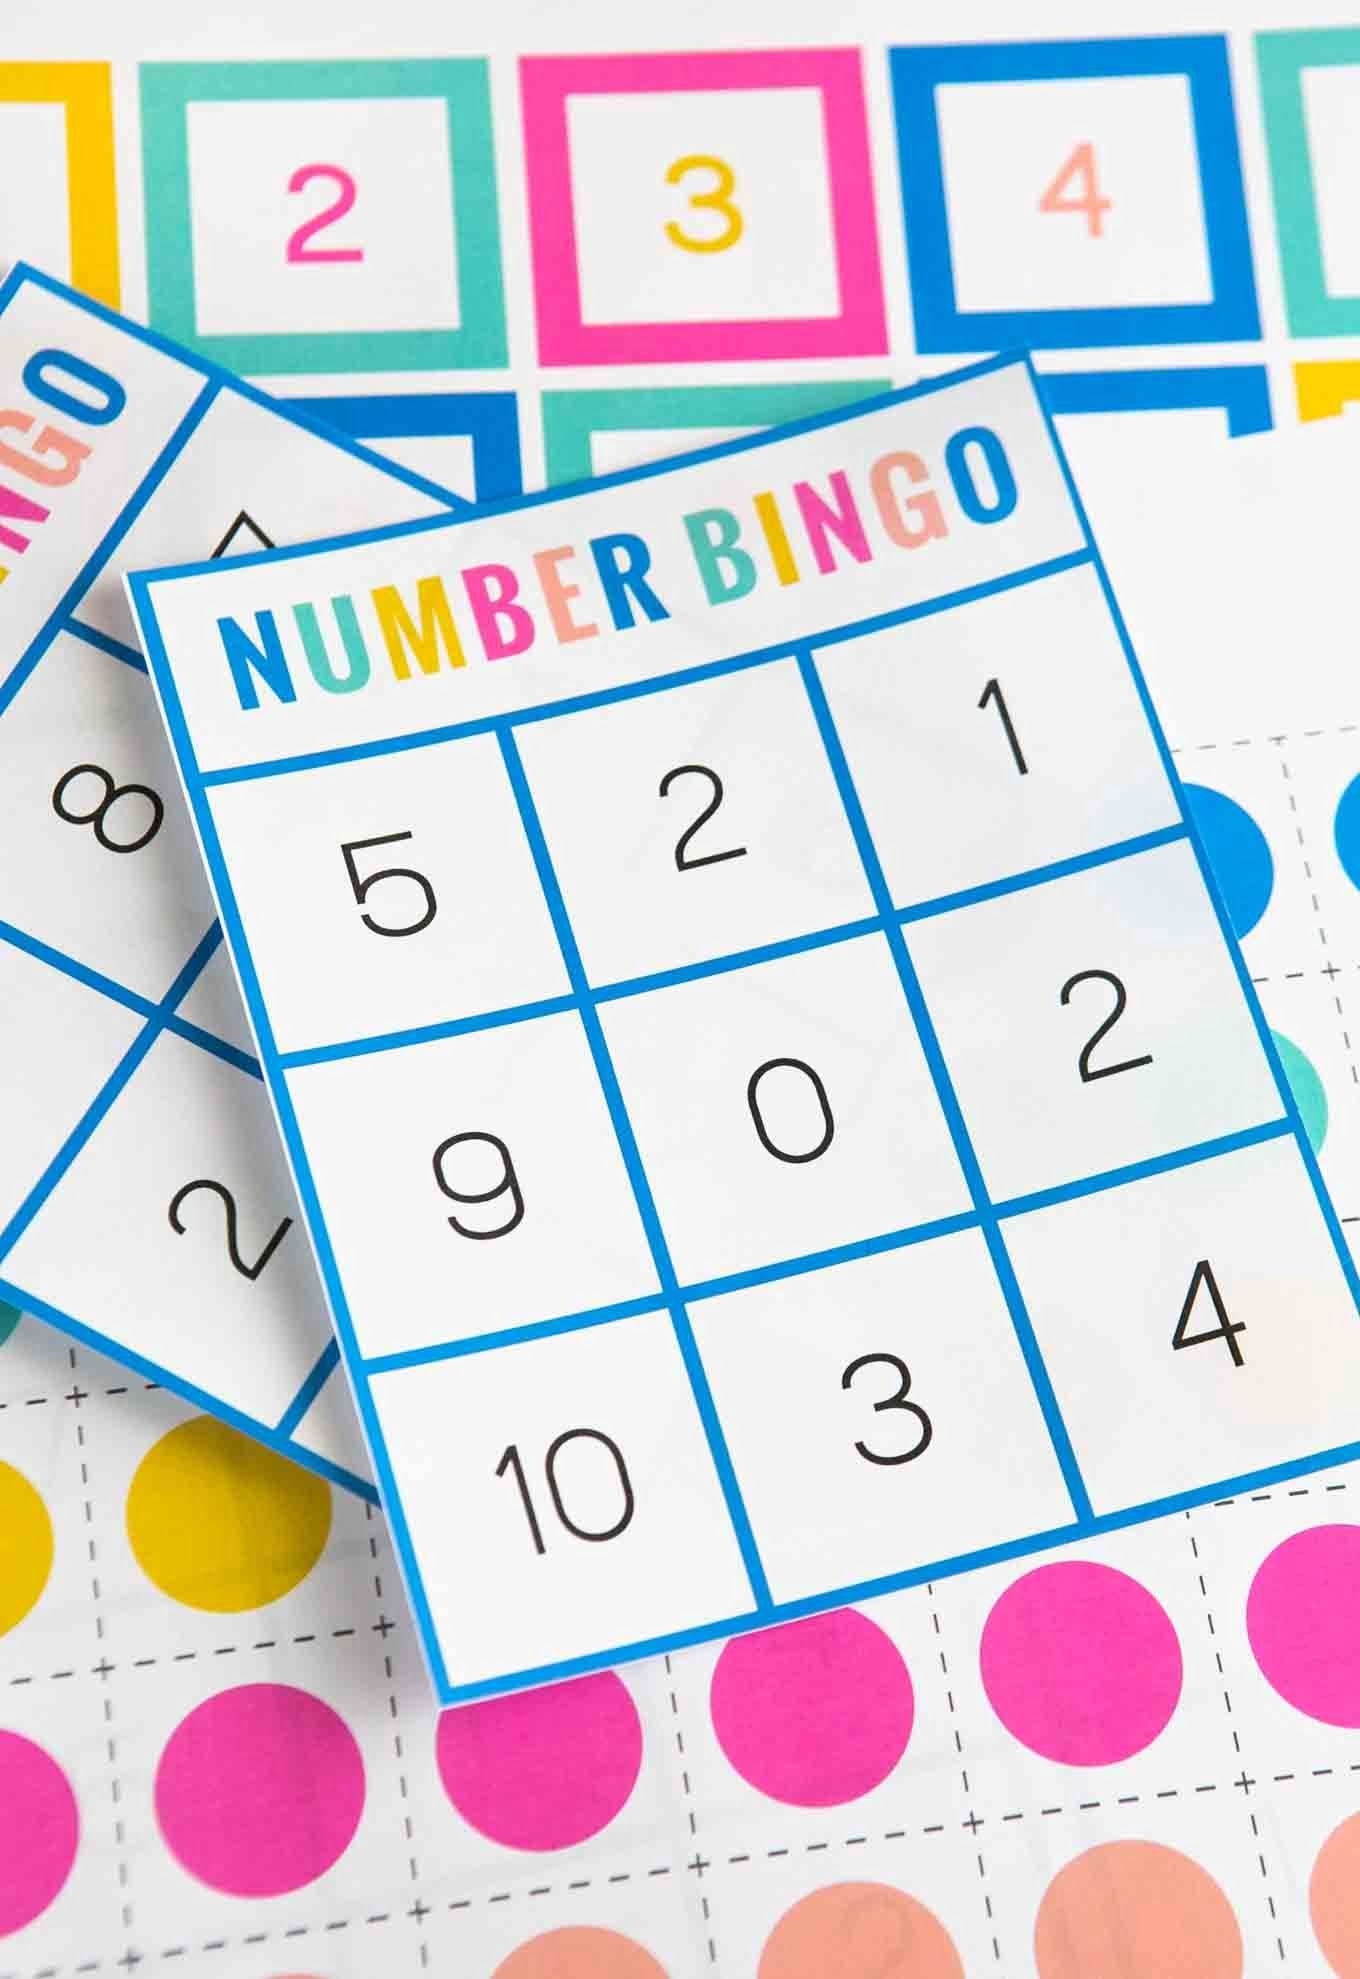 Printable Bingo Cards 0-20